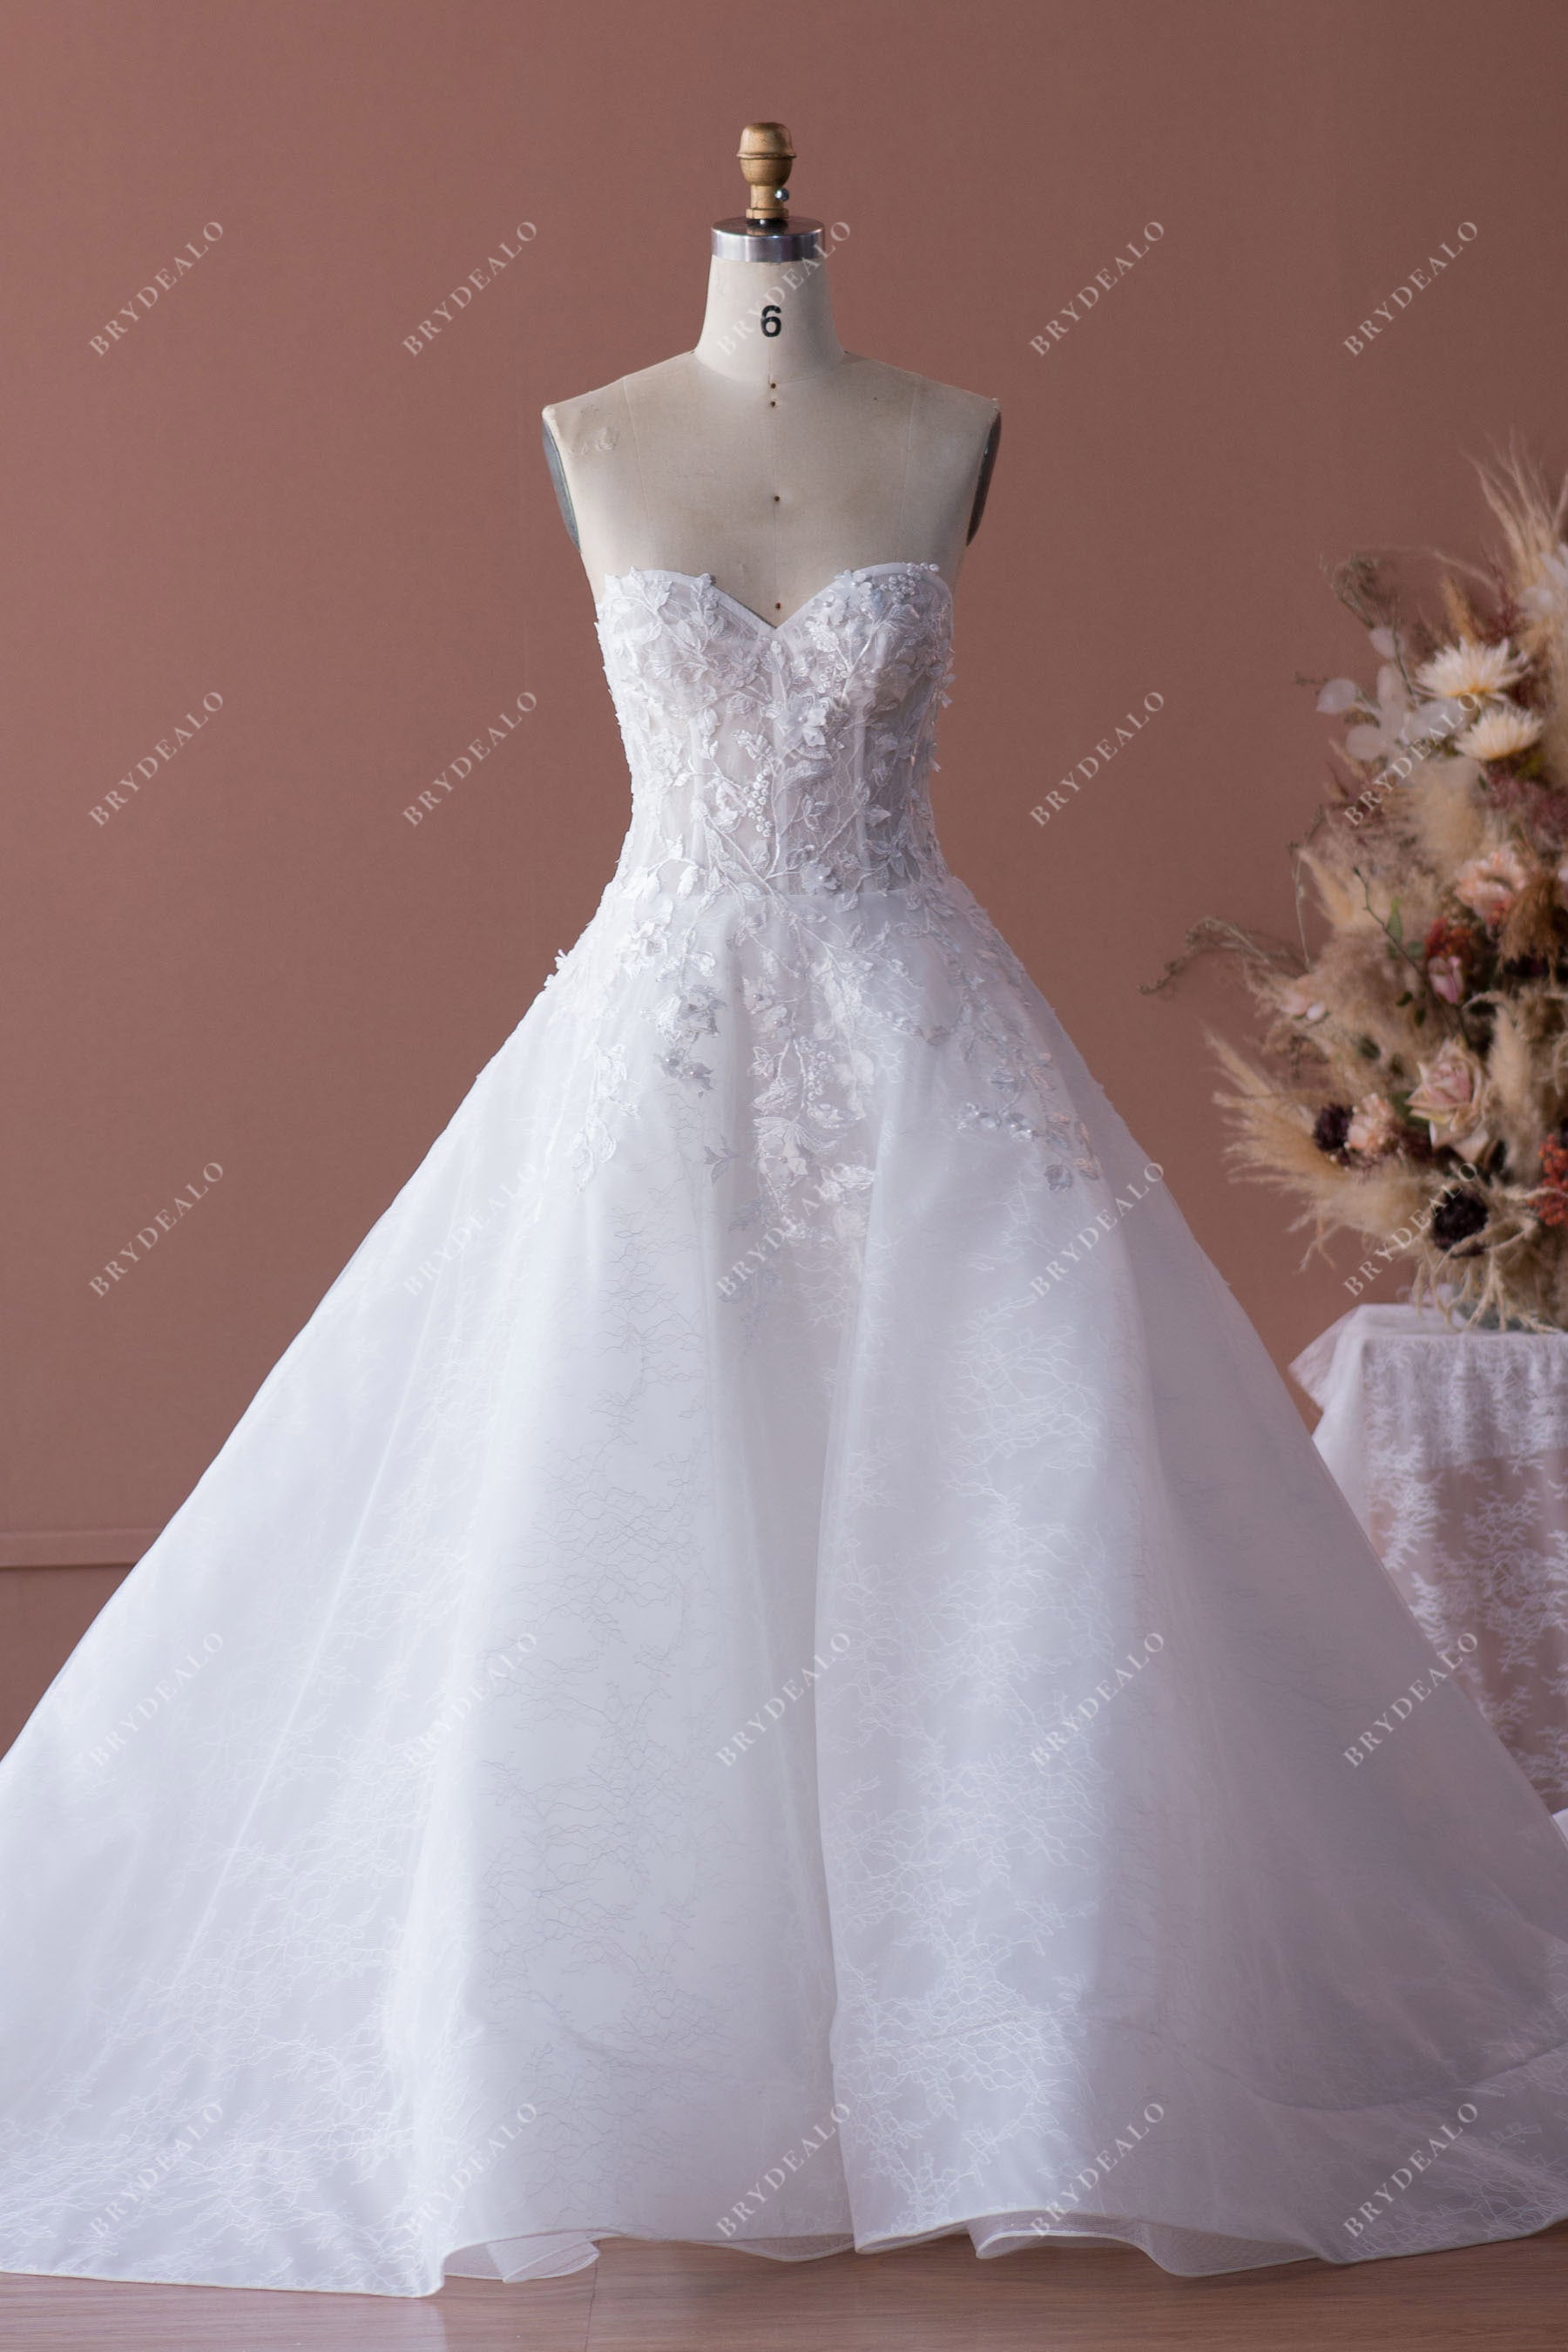 Wedding Dress Ballgown Sweetheart Neck Corset Back Strapless Floor Length